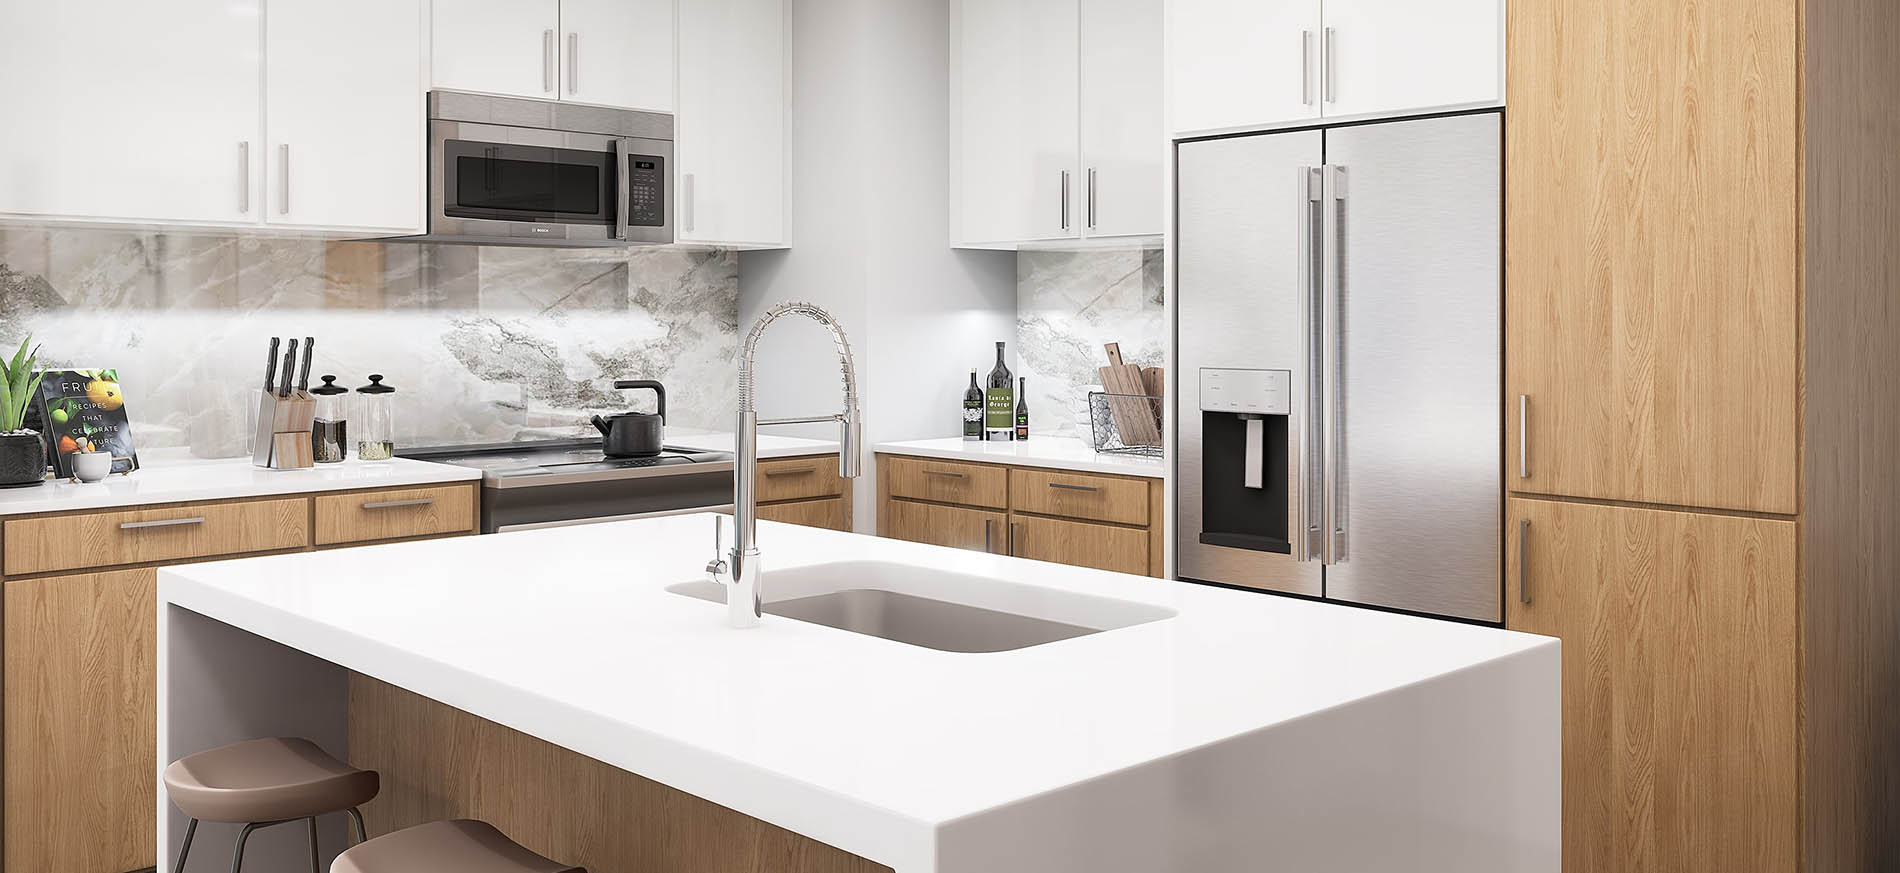 101 N Meridian Penthouse apartment kitchen rendering